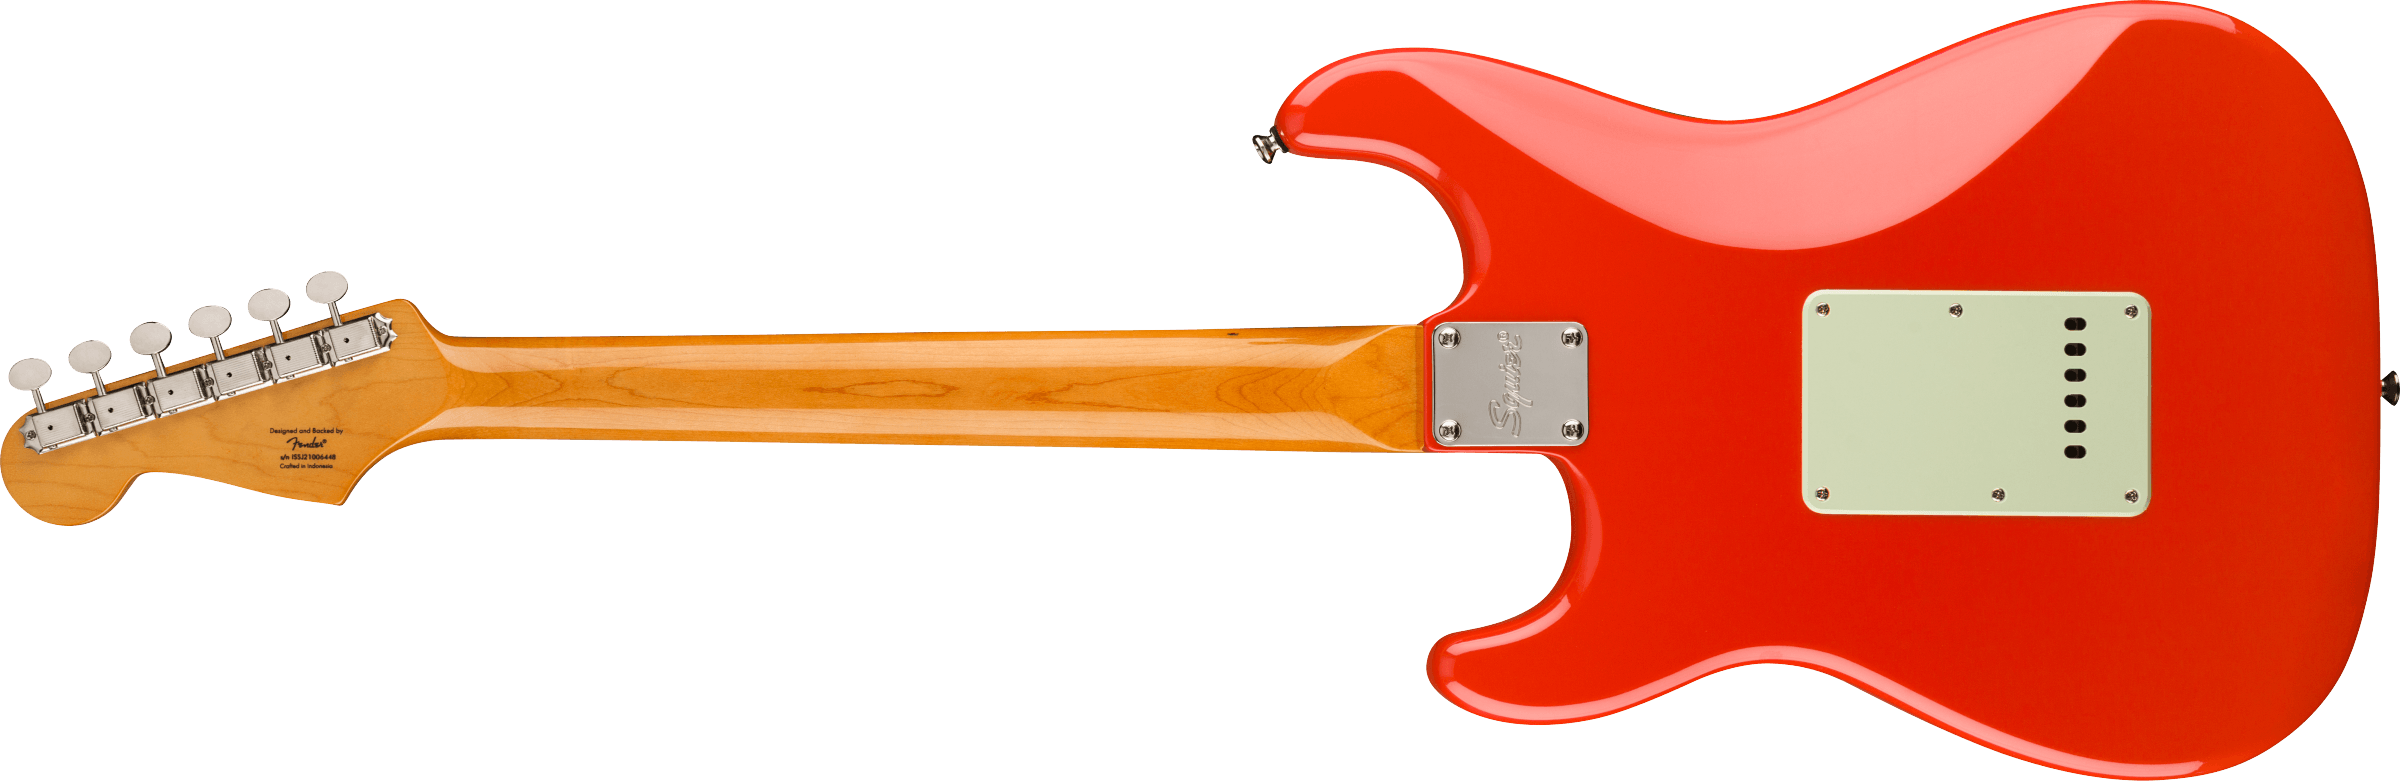 Squier Strat '60s Classic Vibe Fsr Ltd Lau - Fiesta Red - Guitarra eléctrica con forma de str. - Variation 2